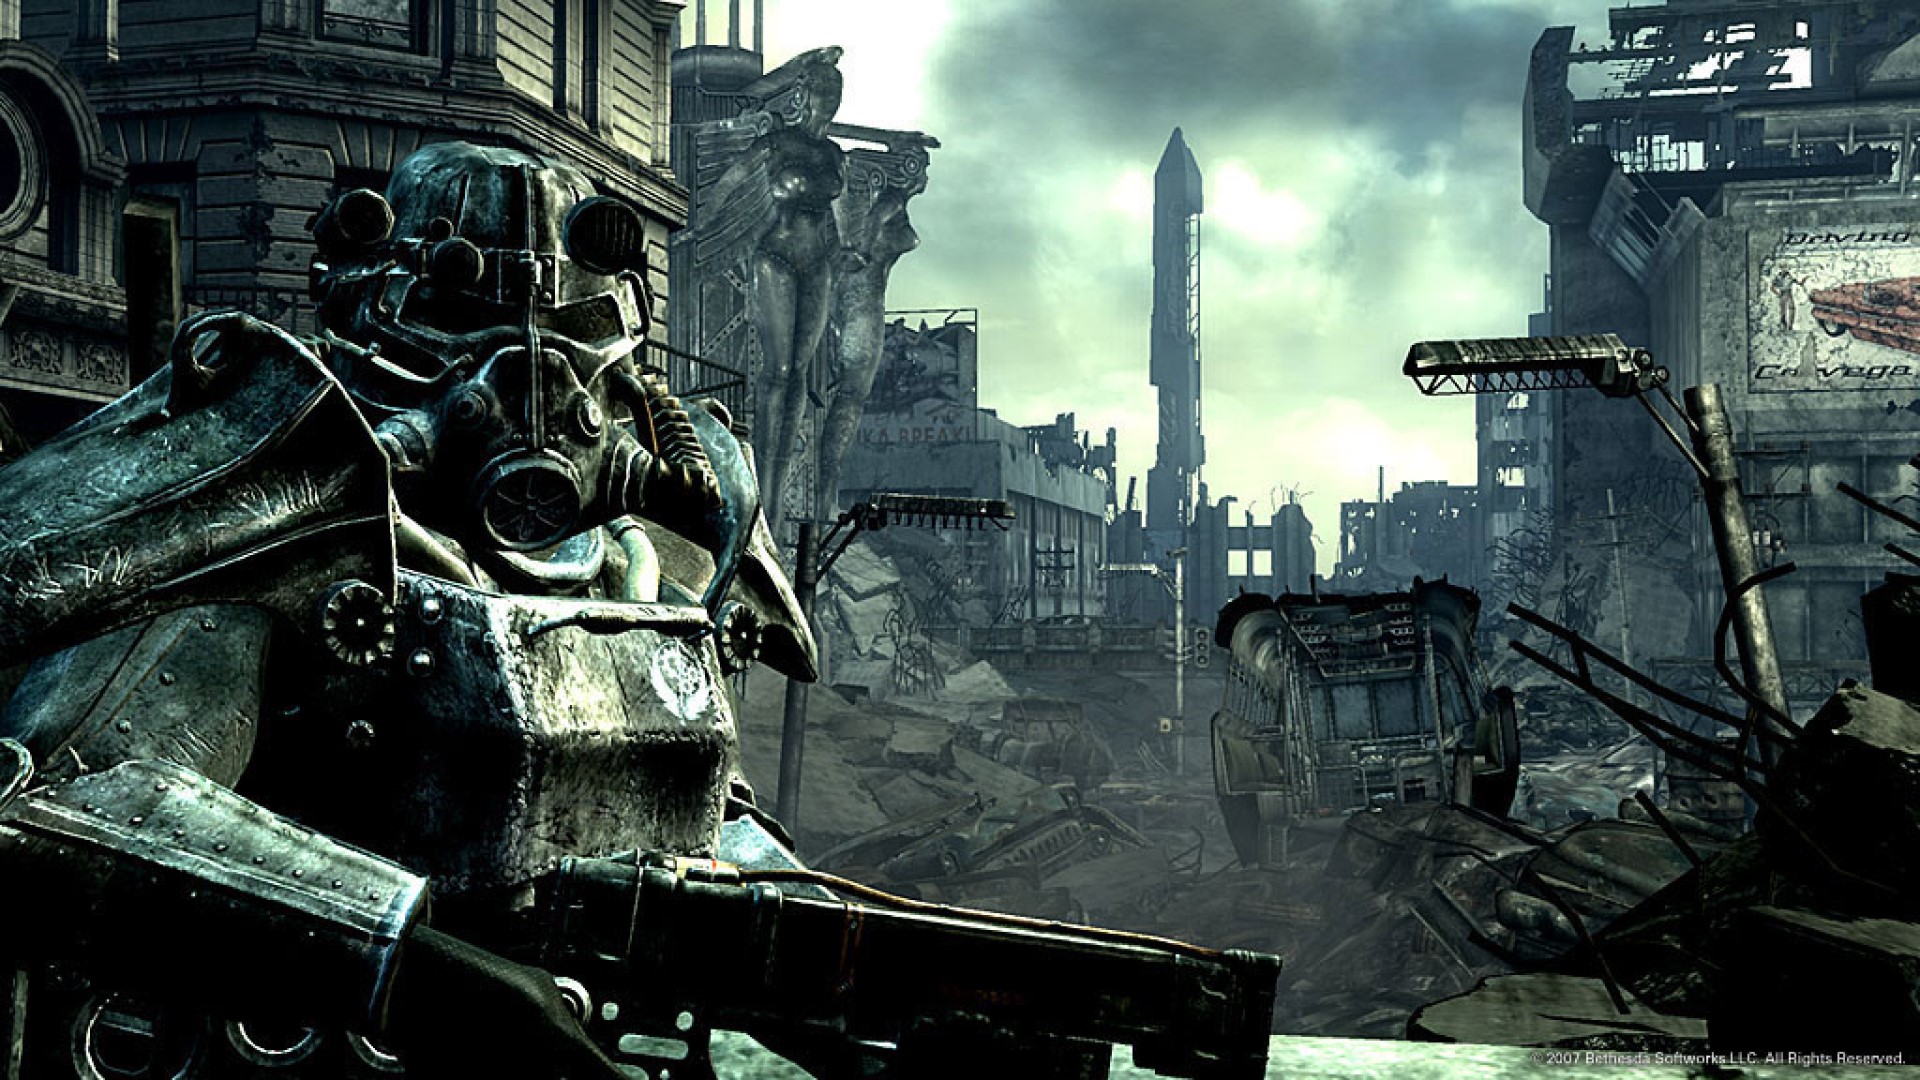 Fallout 3 luopui lopulta Games For Windows Livesta 13 vuoden jälkeen